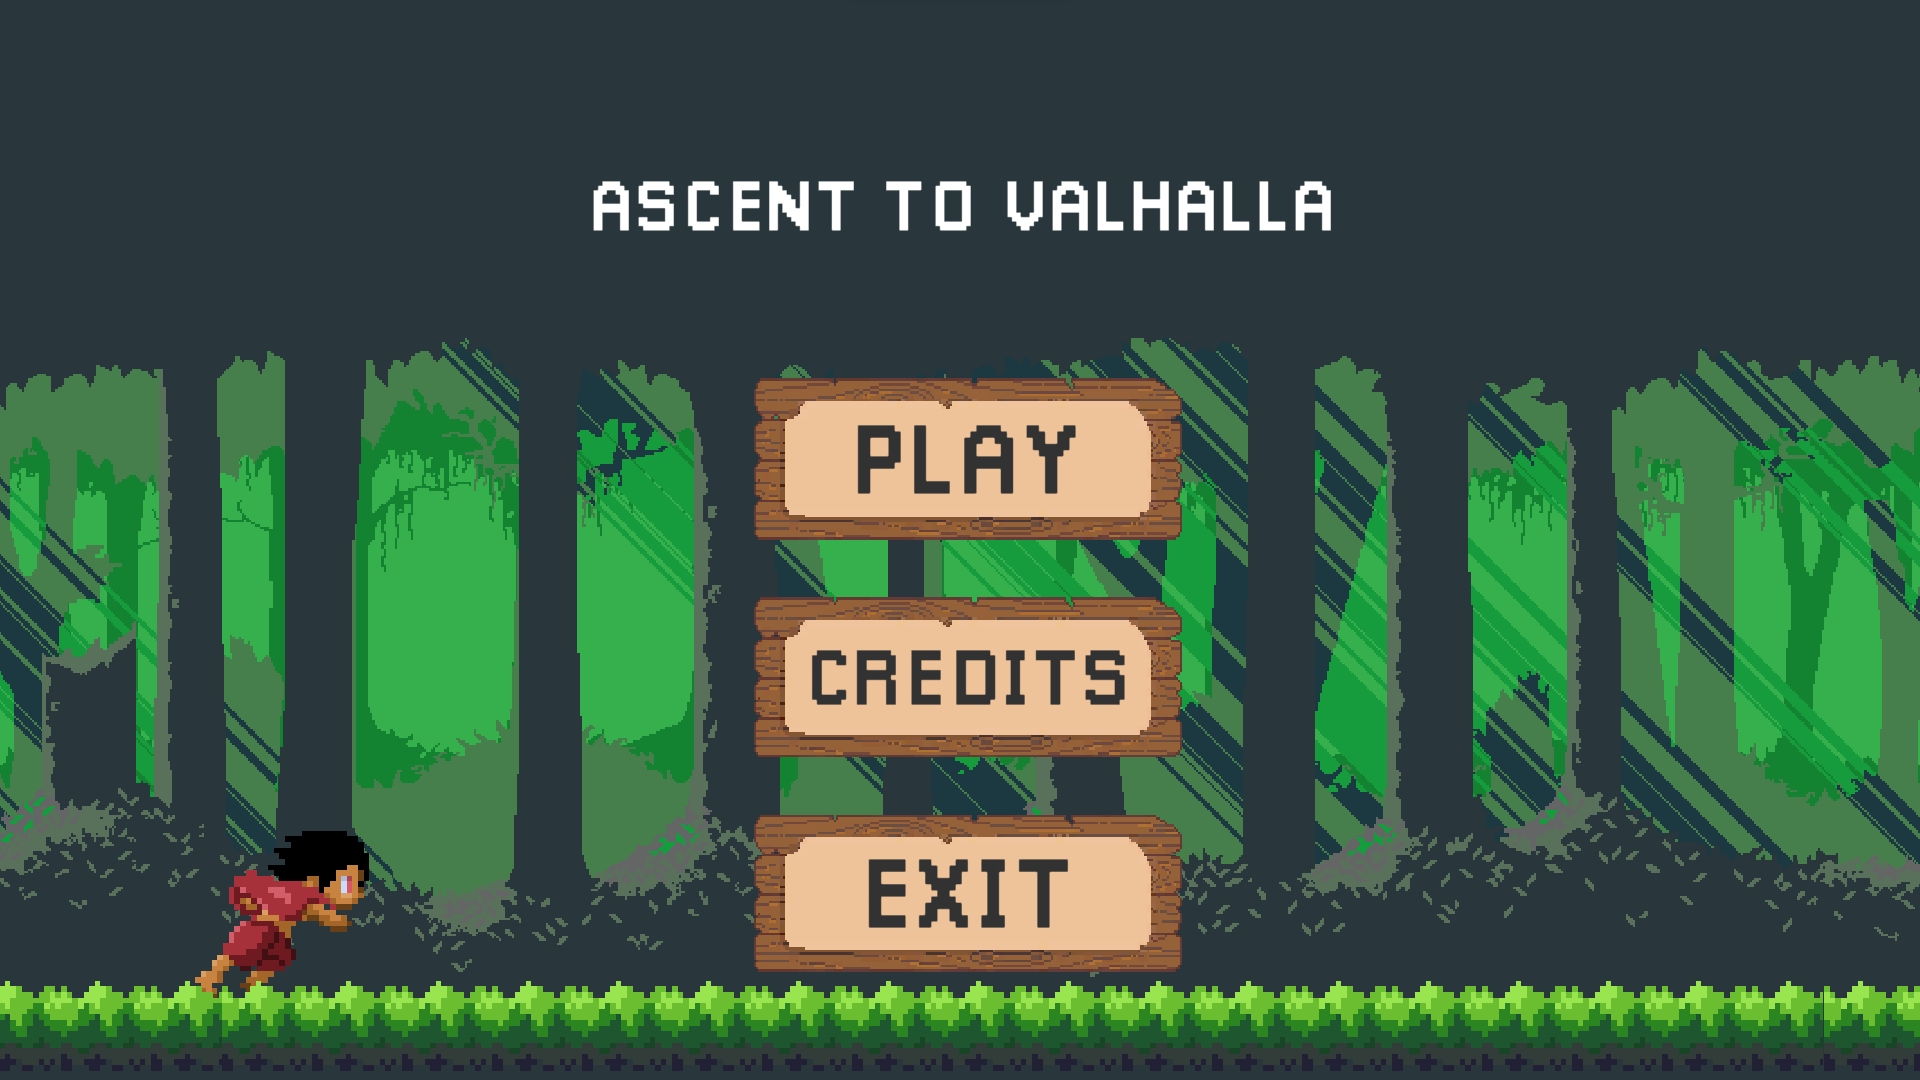 Ascent to Valhalla